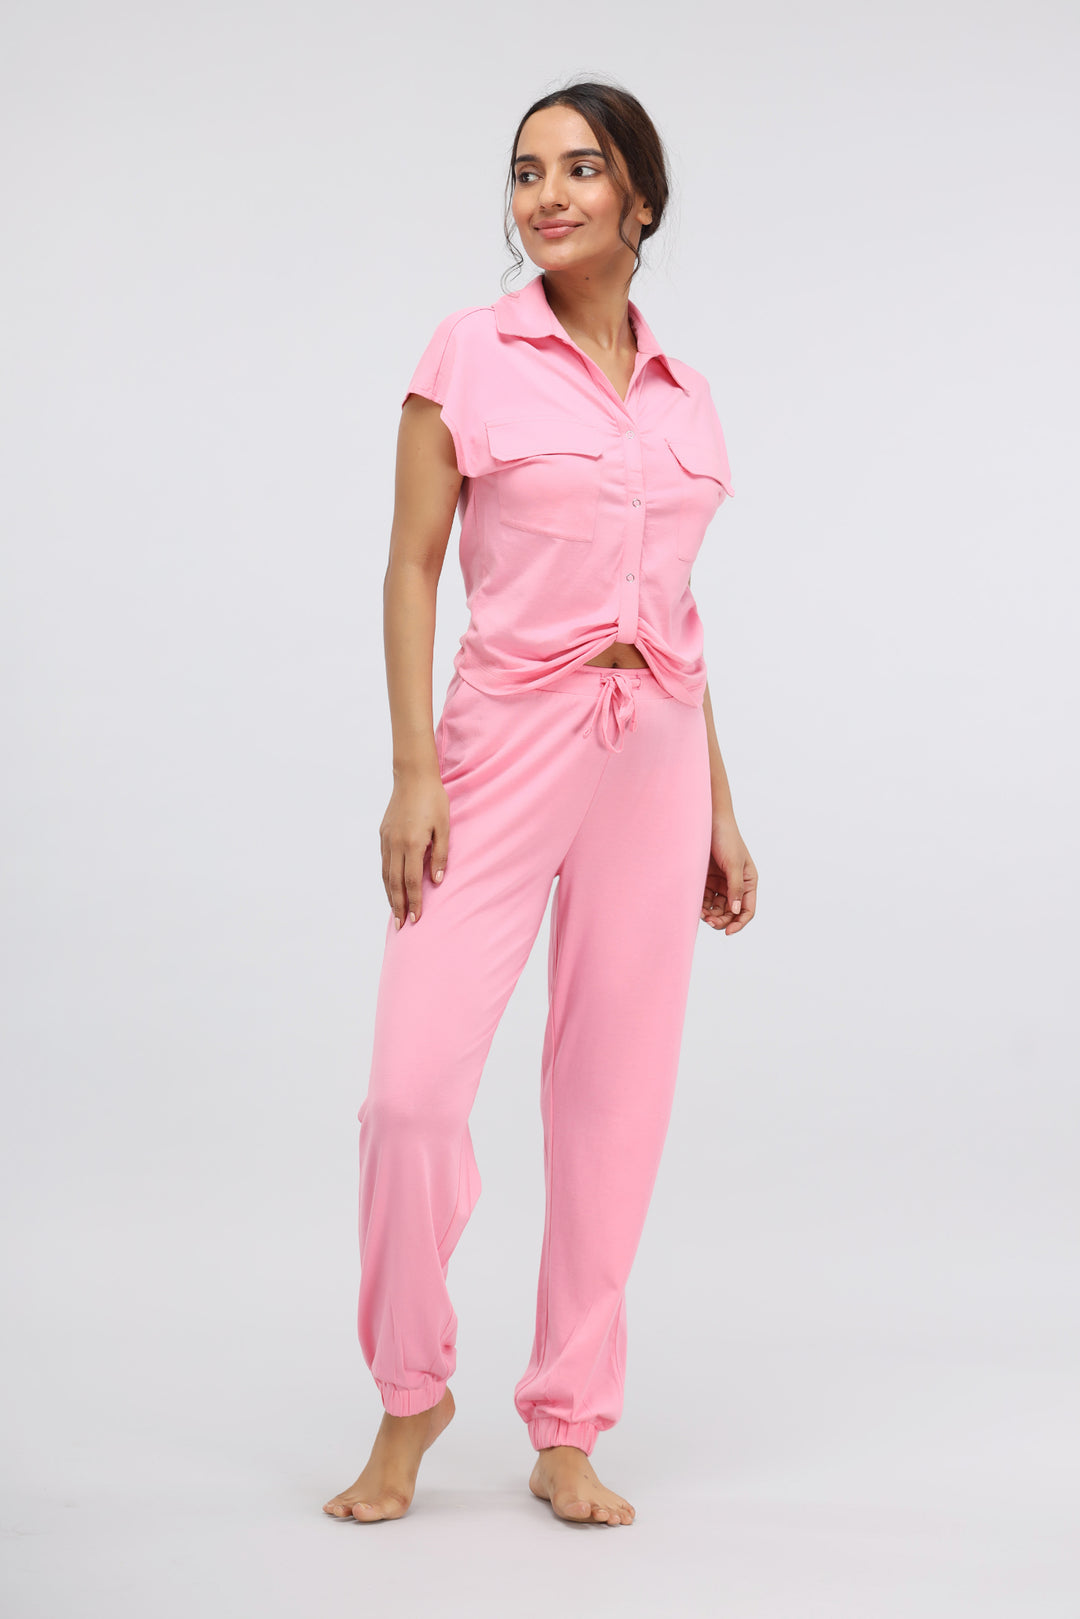 Sachet Pink Supima® Collared Top